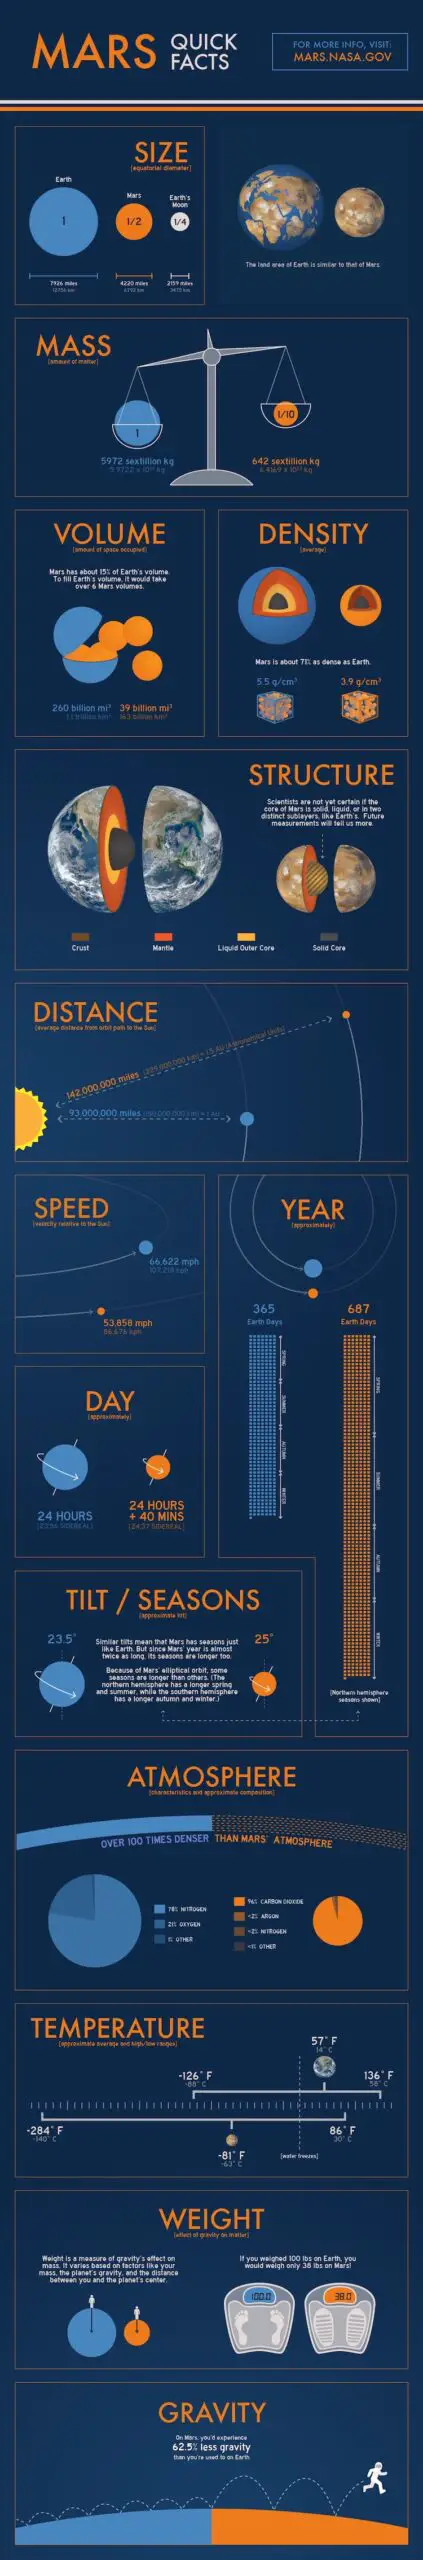 Mars Facts NASA Infographic